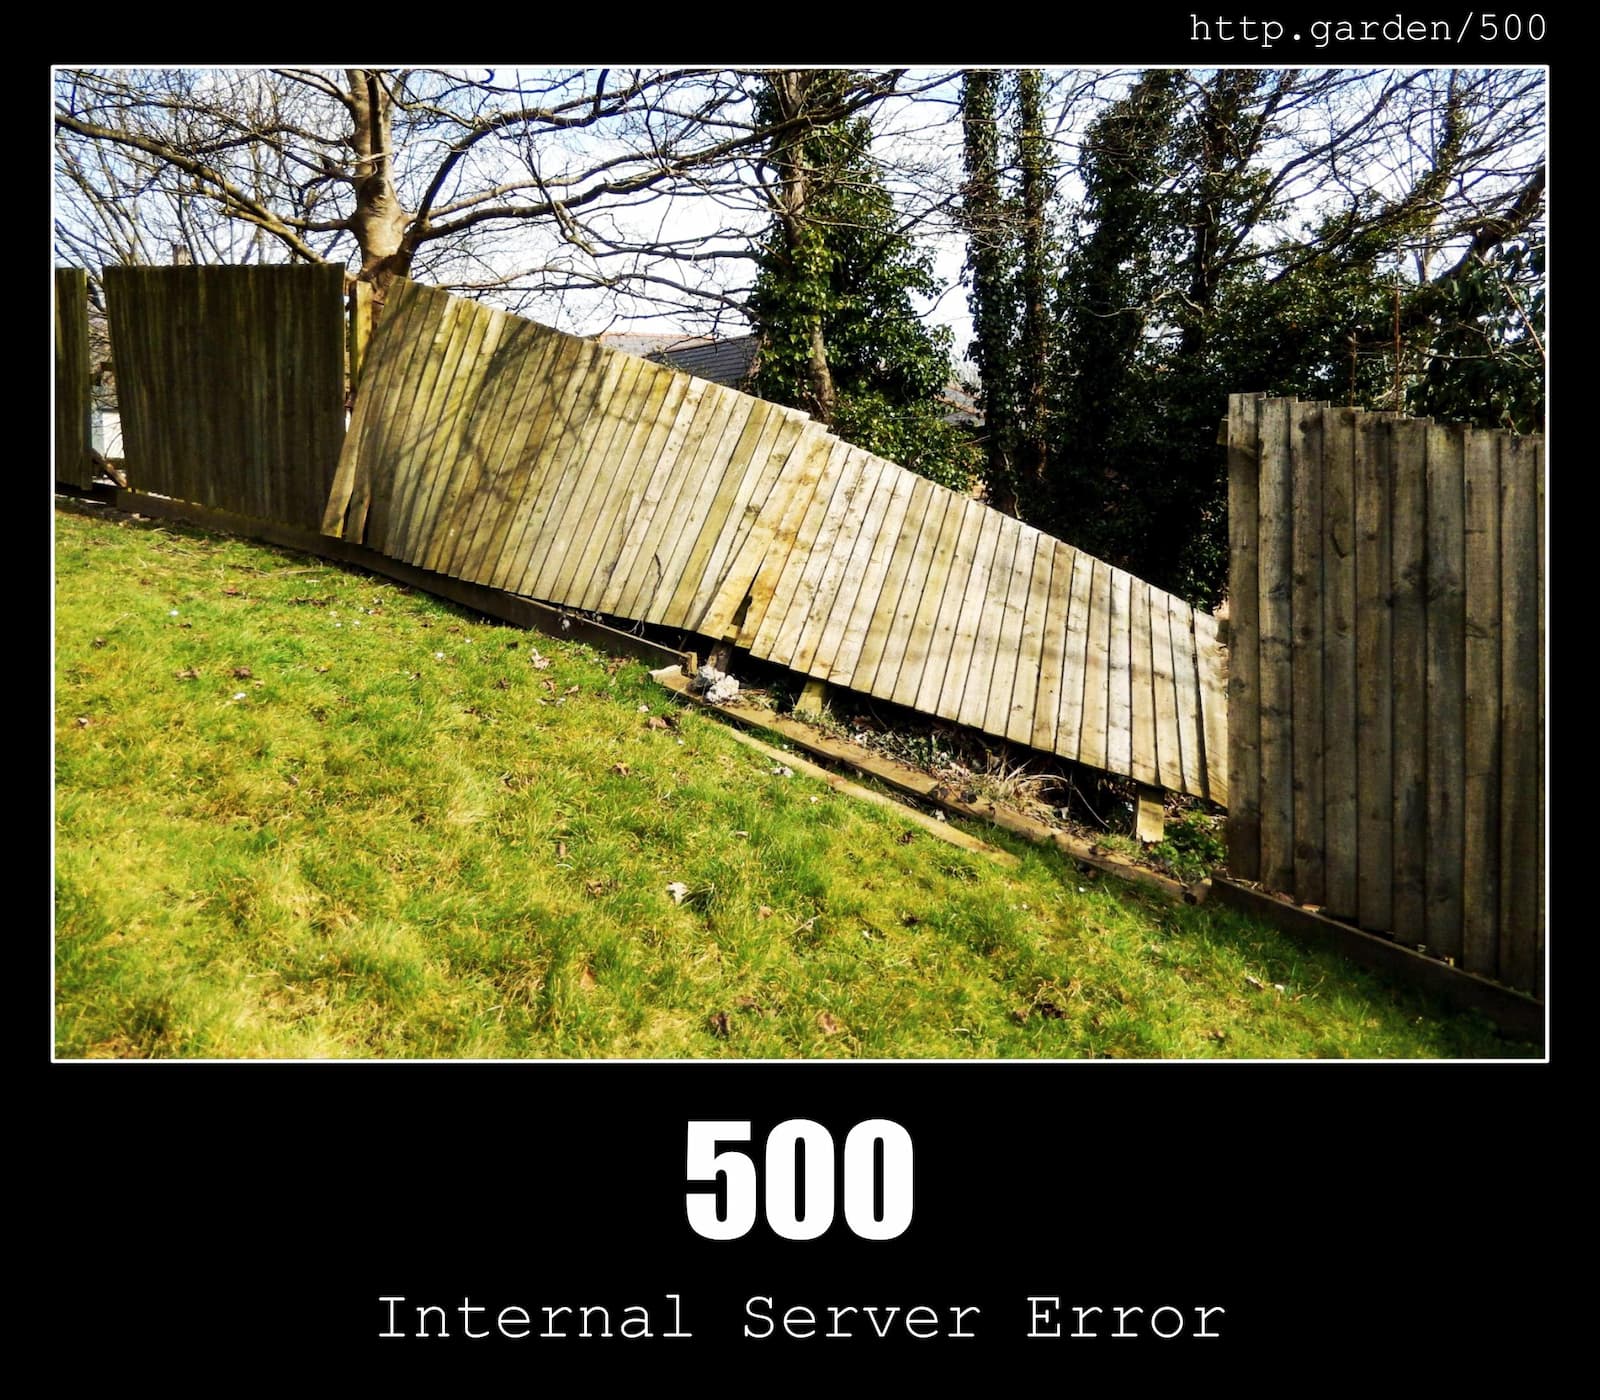 HTTP Status Code 500 Internal Server Error & Gardening